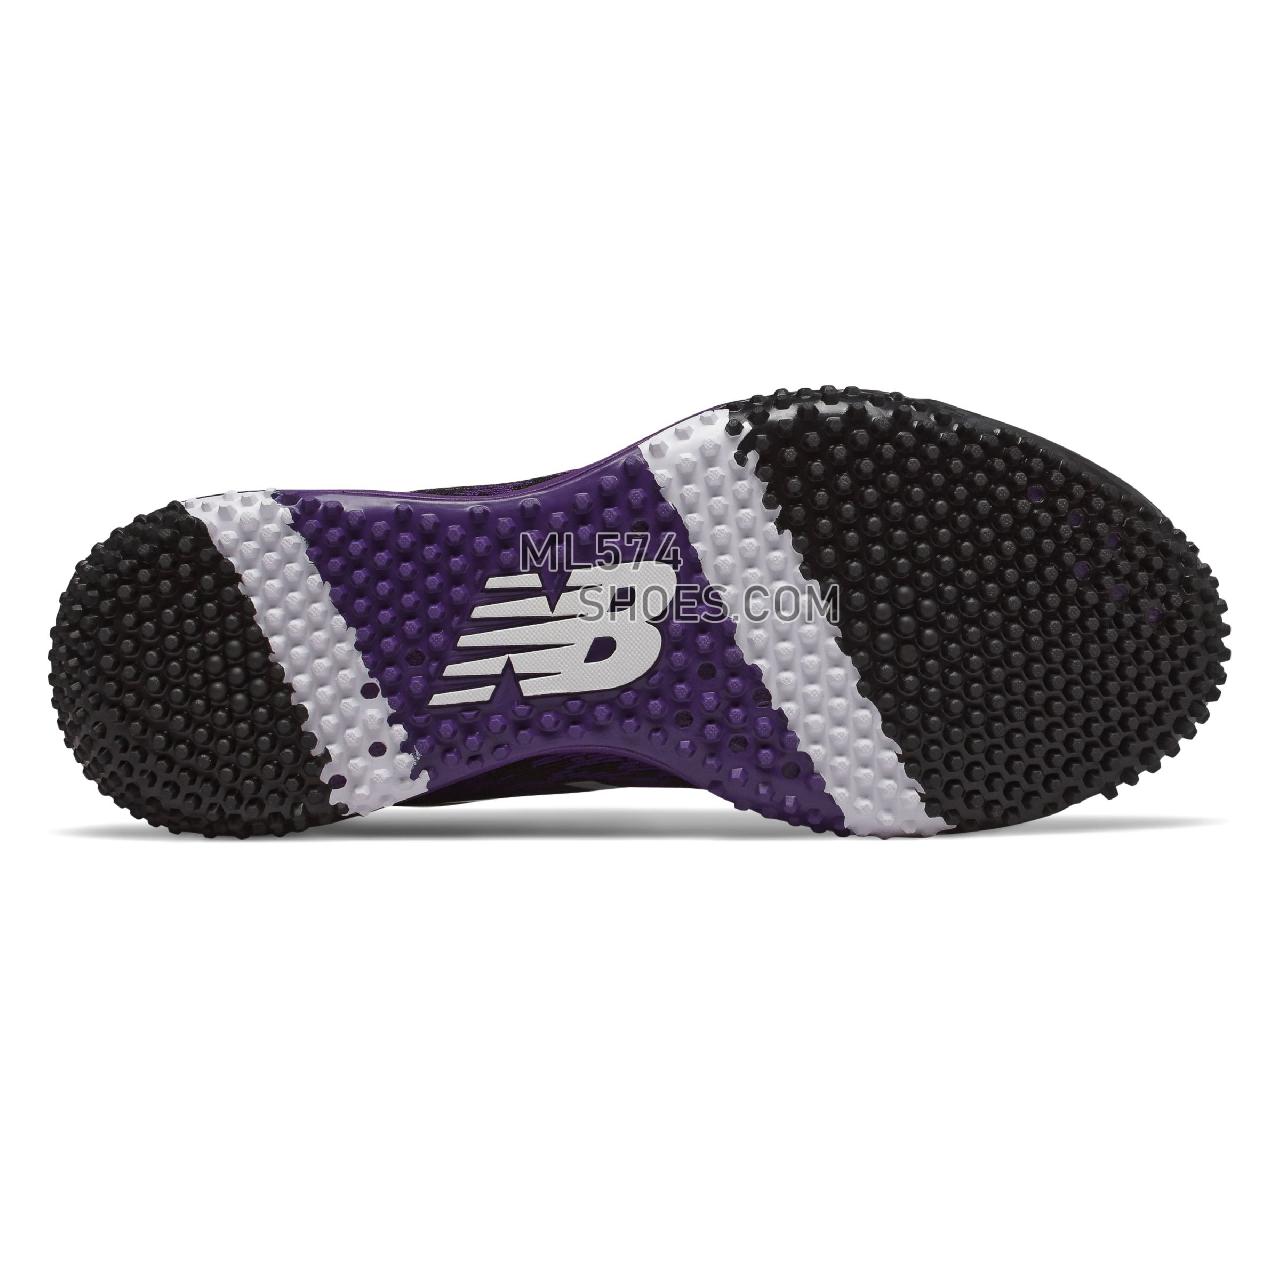 New Balance 4040v5 Turf - Men's Baseball Turf - Black with Purple - T4040BP5